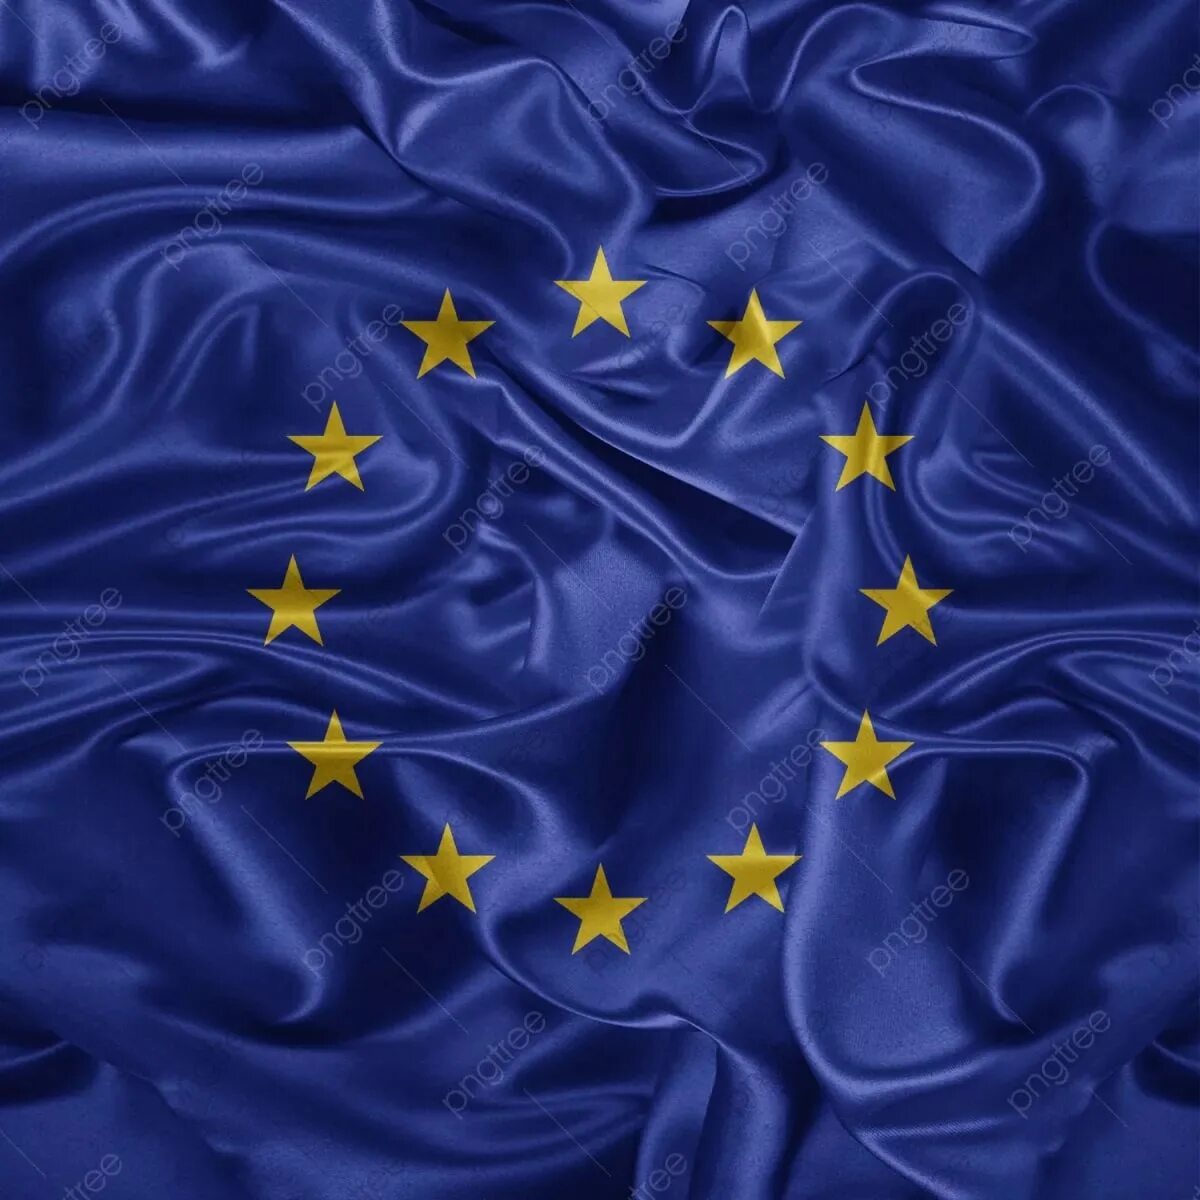 Eu union. Европейский Союз (Евросоюз, ЕС). ЕС Европейский Союз флаг. Флаг Еврокомиссии. Европейский Союз Знамя.